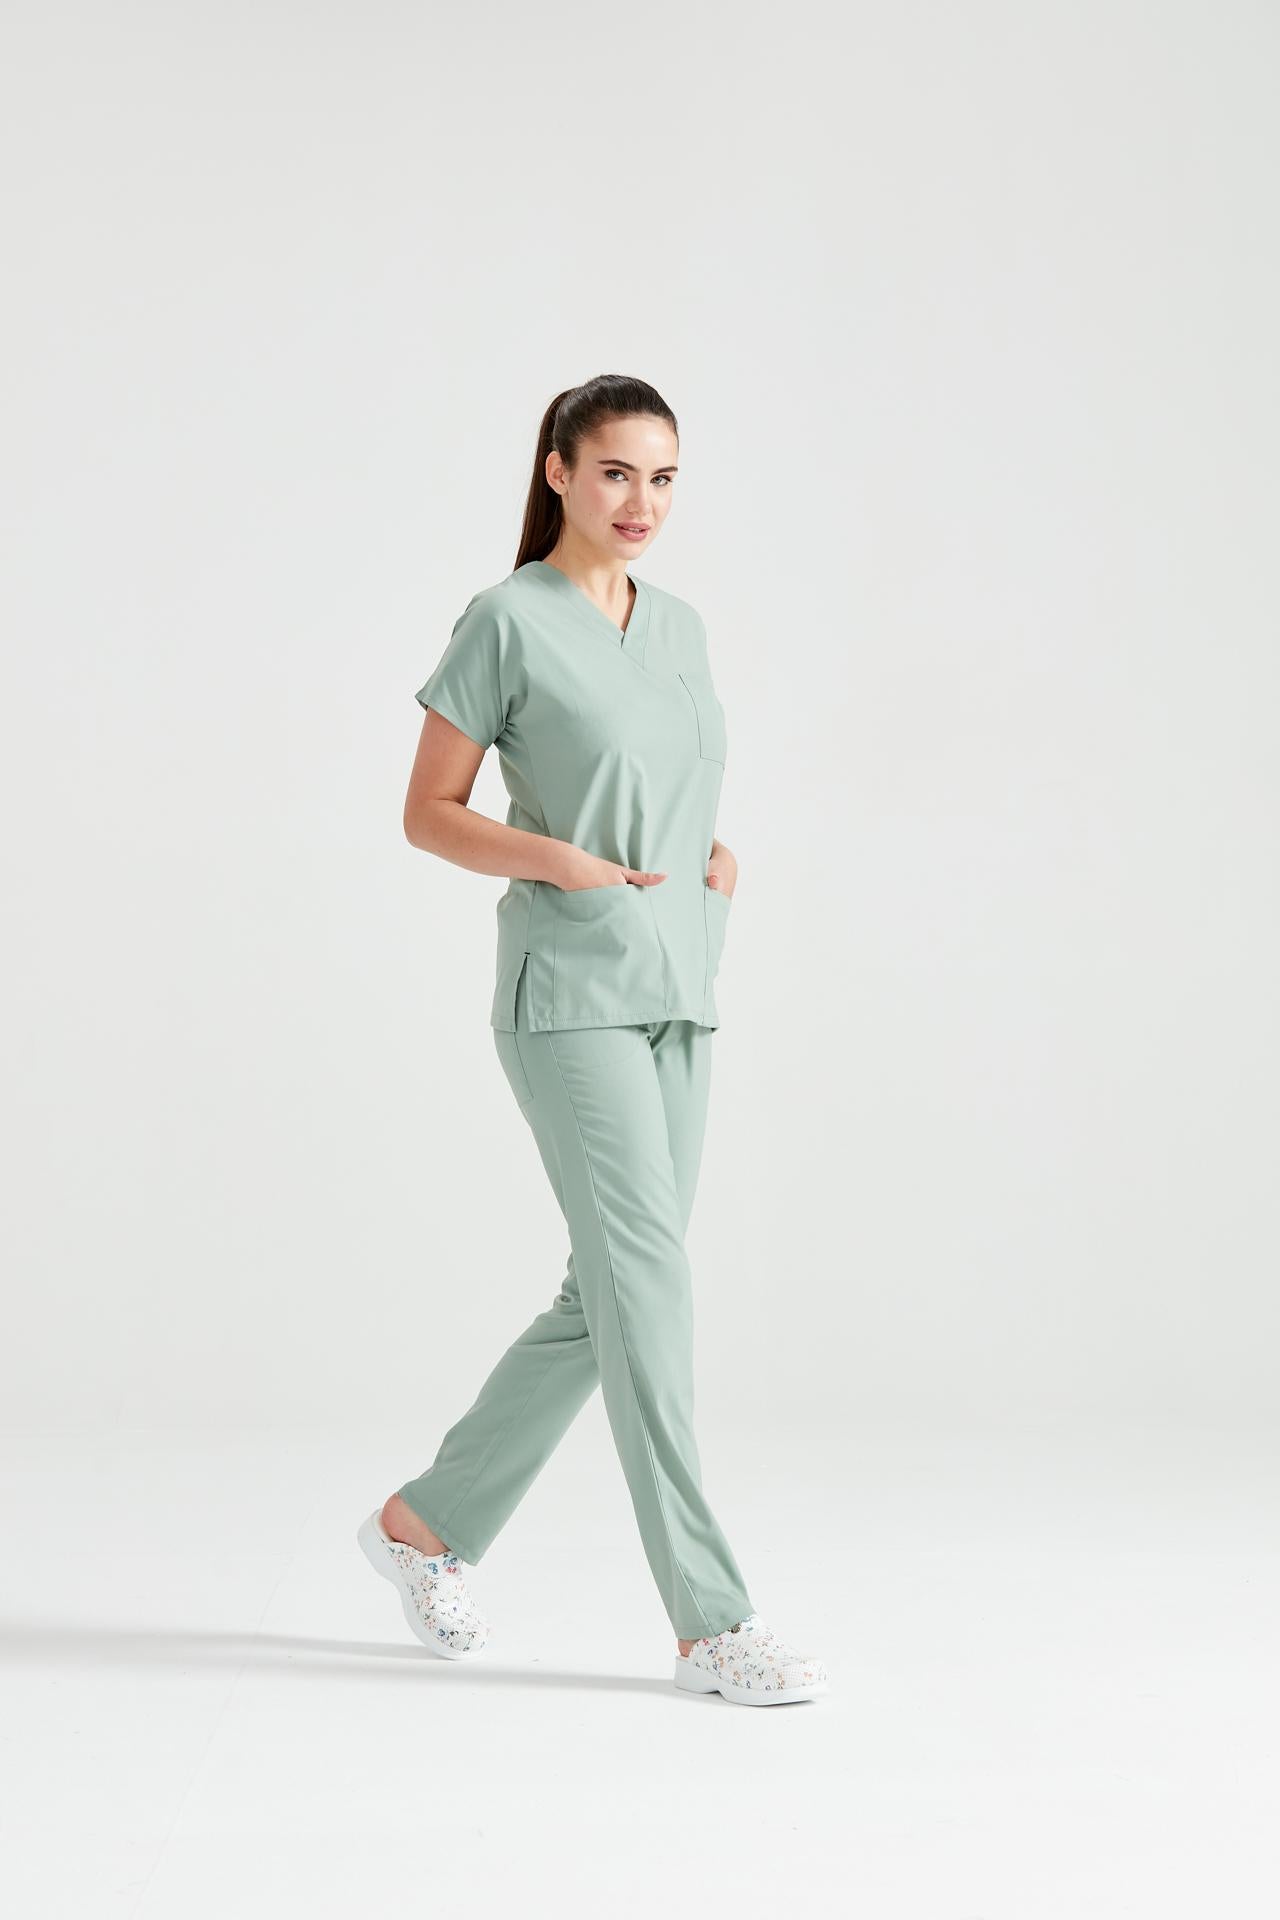 Asistenta medicala imbracata in costum medical de dama din elastan, verde fistic, vedere din profil